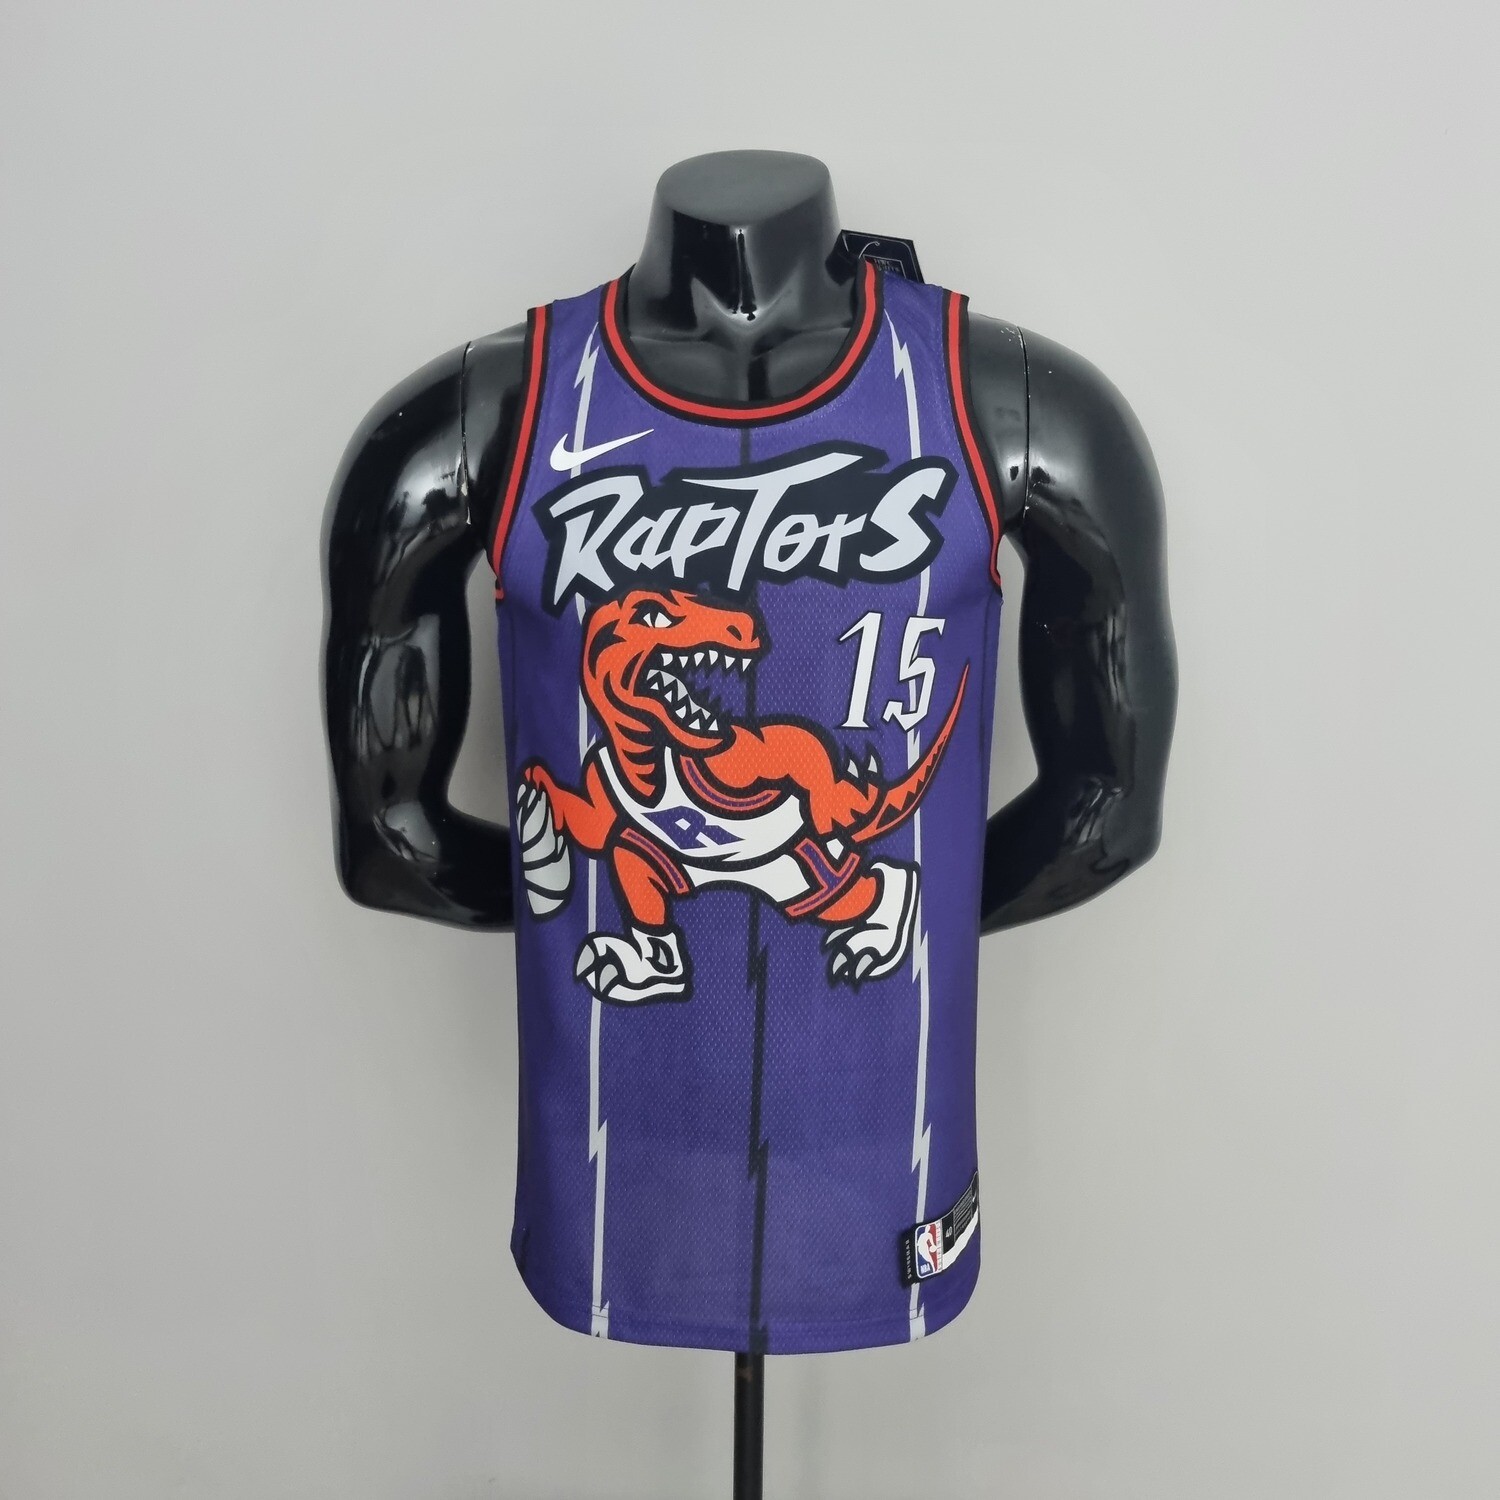 Regata NBA Toronto Carter 15 - Raptors Roxo